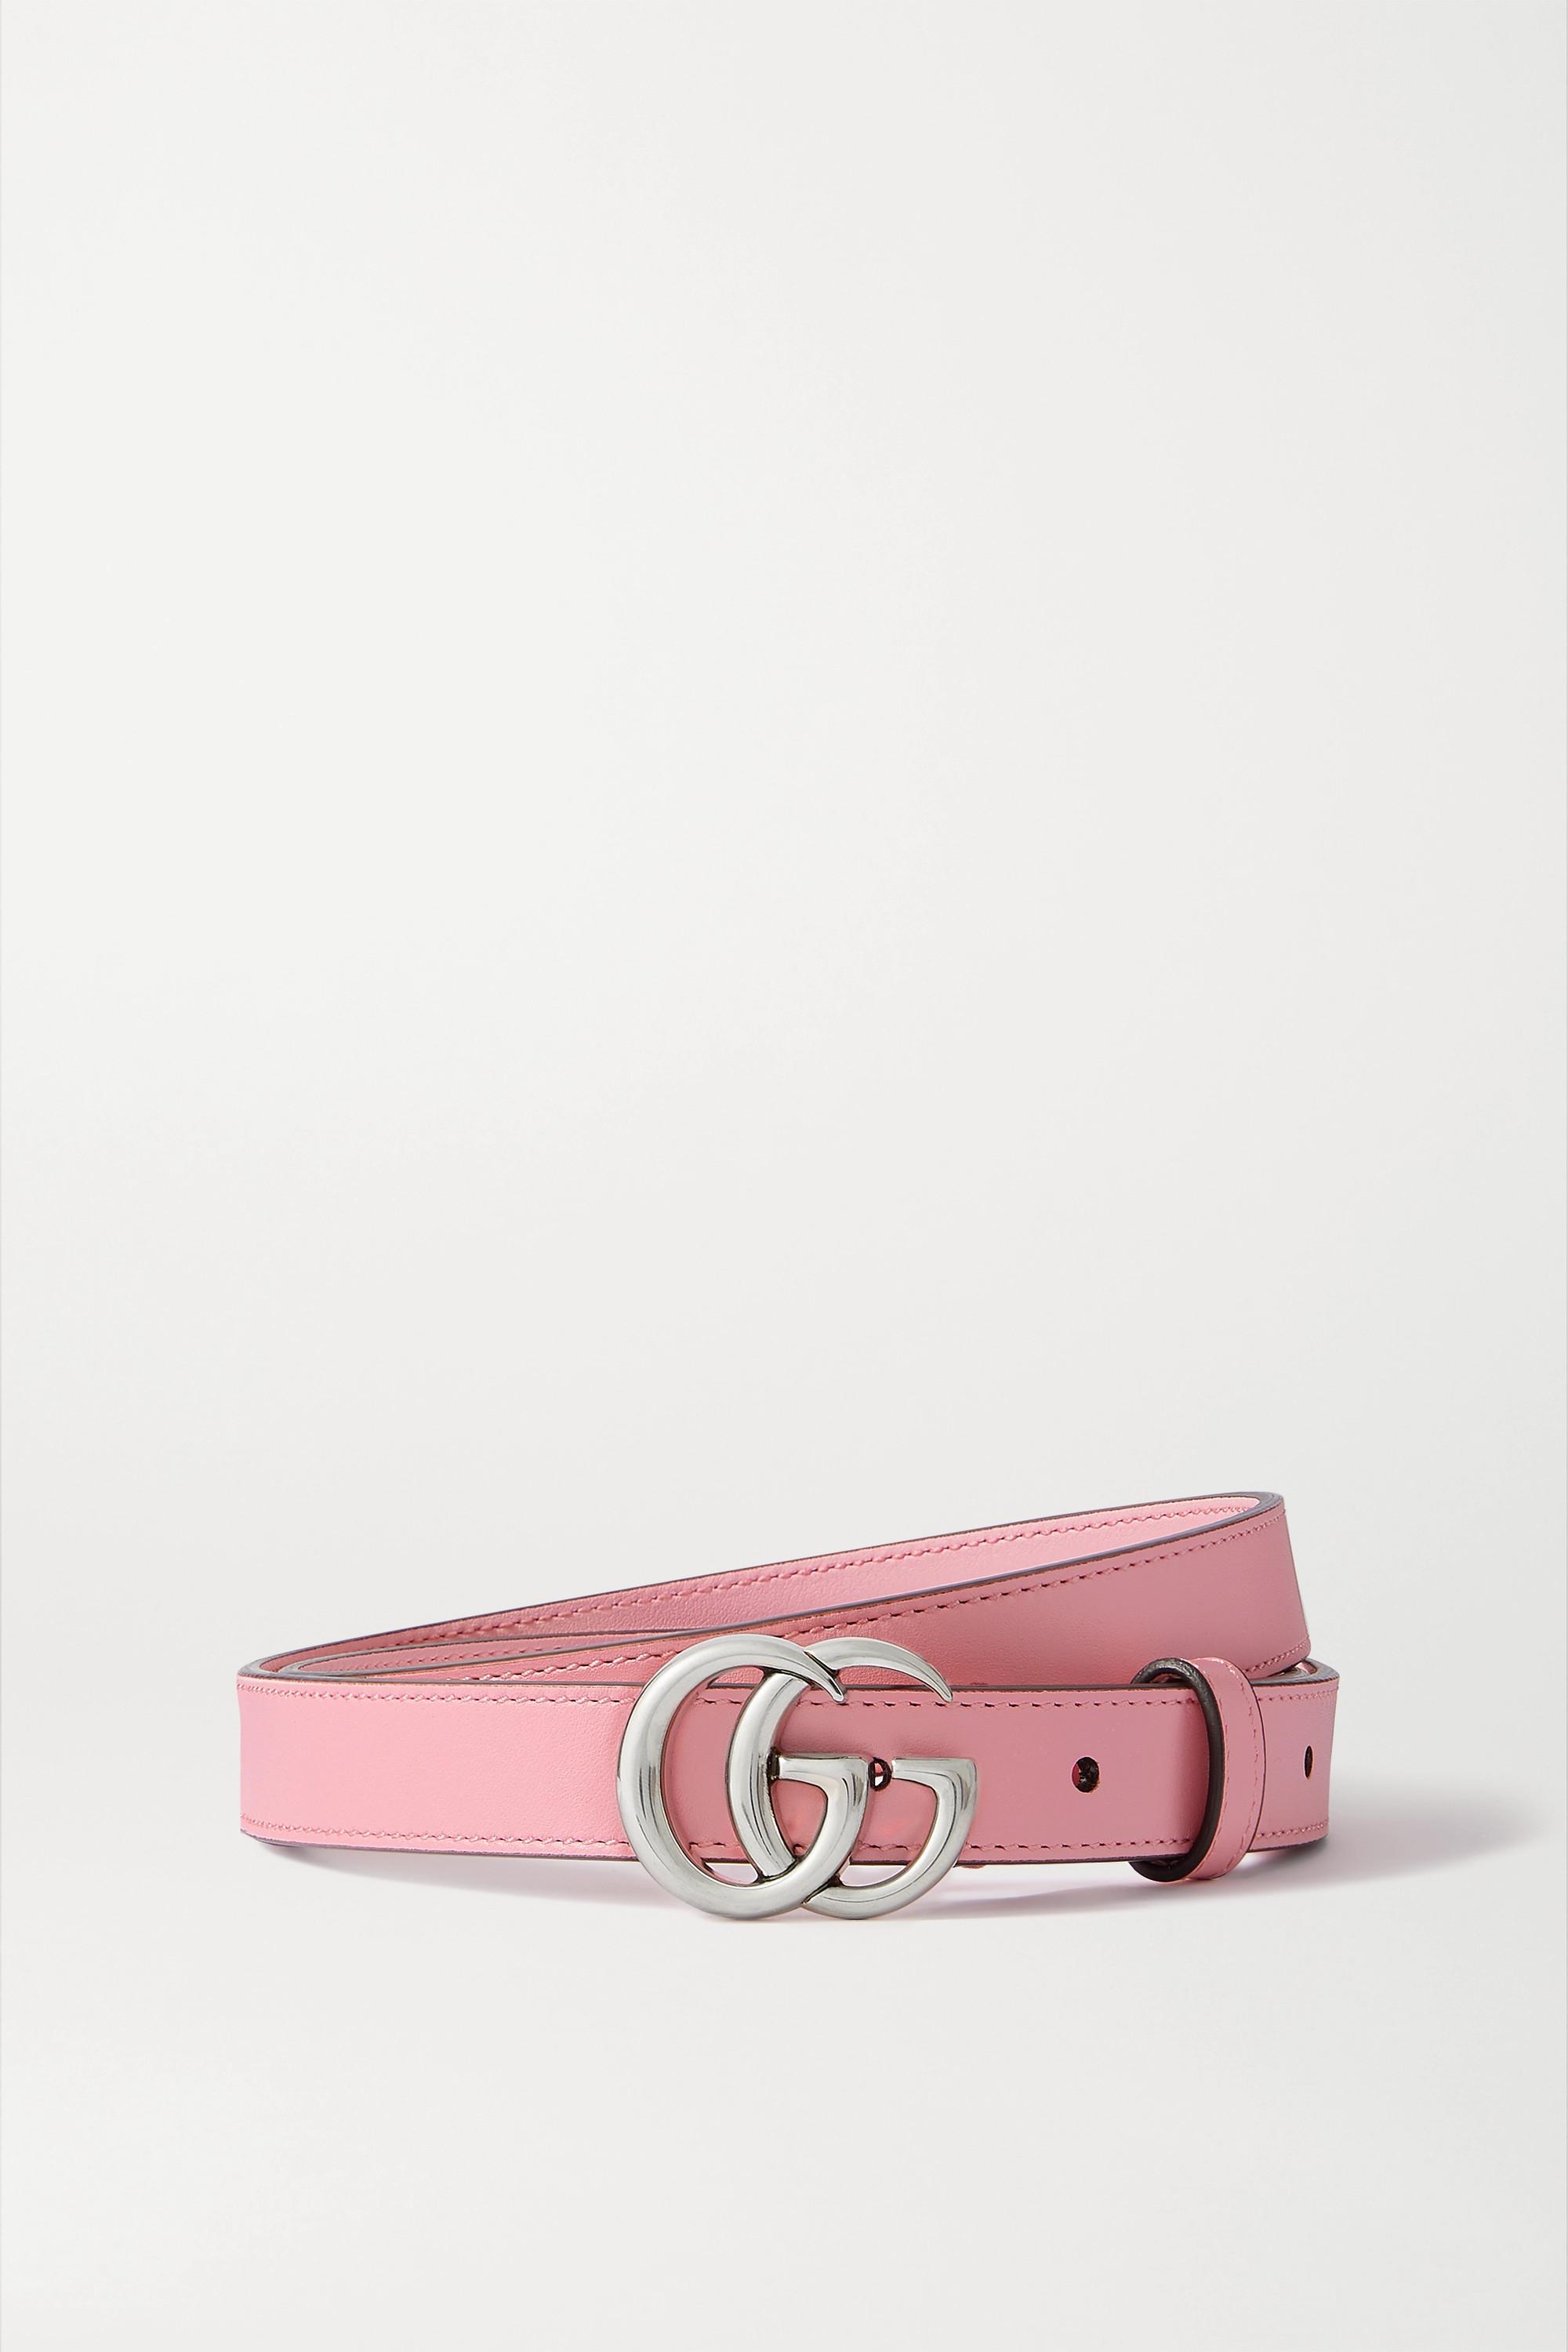 baby pink gucci belt